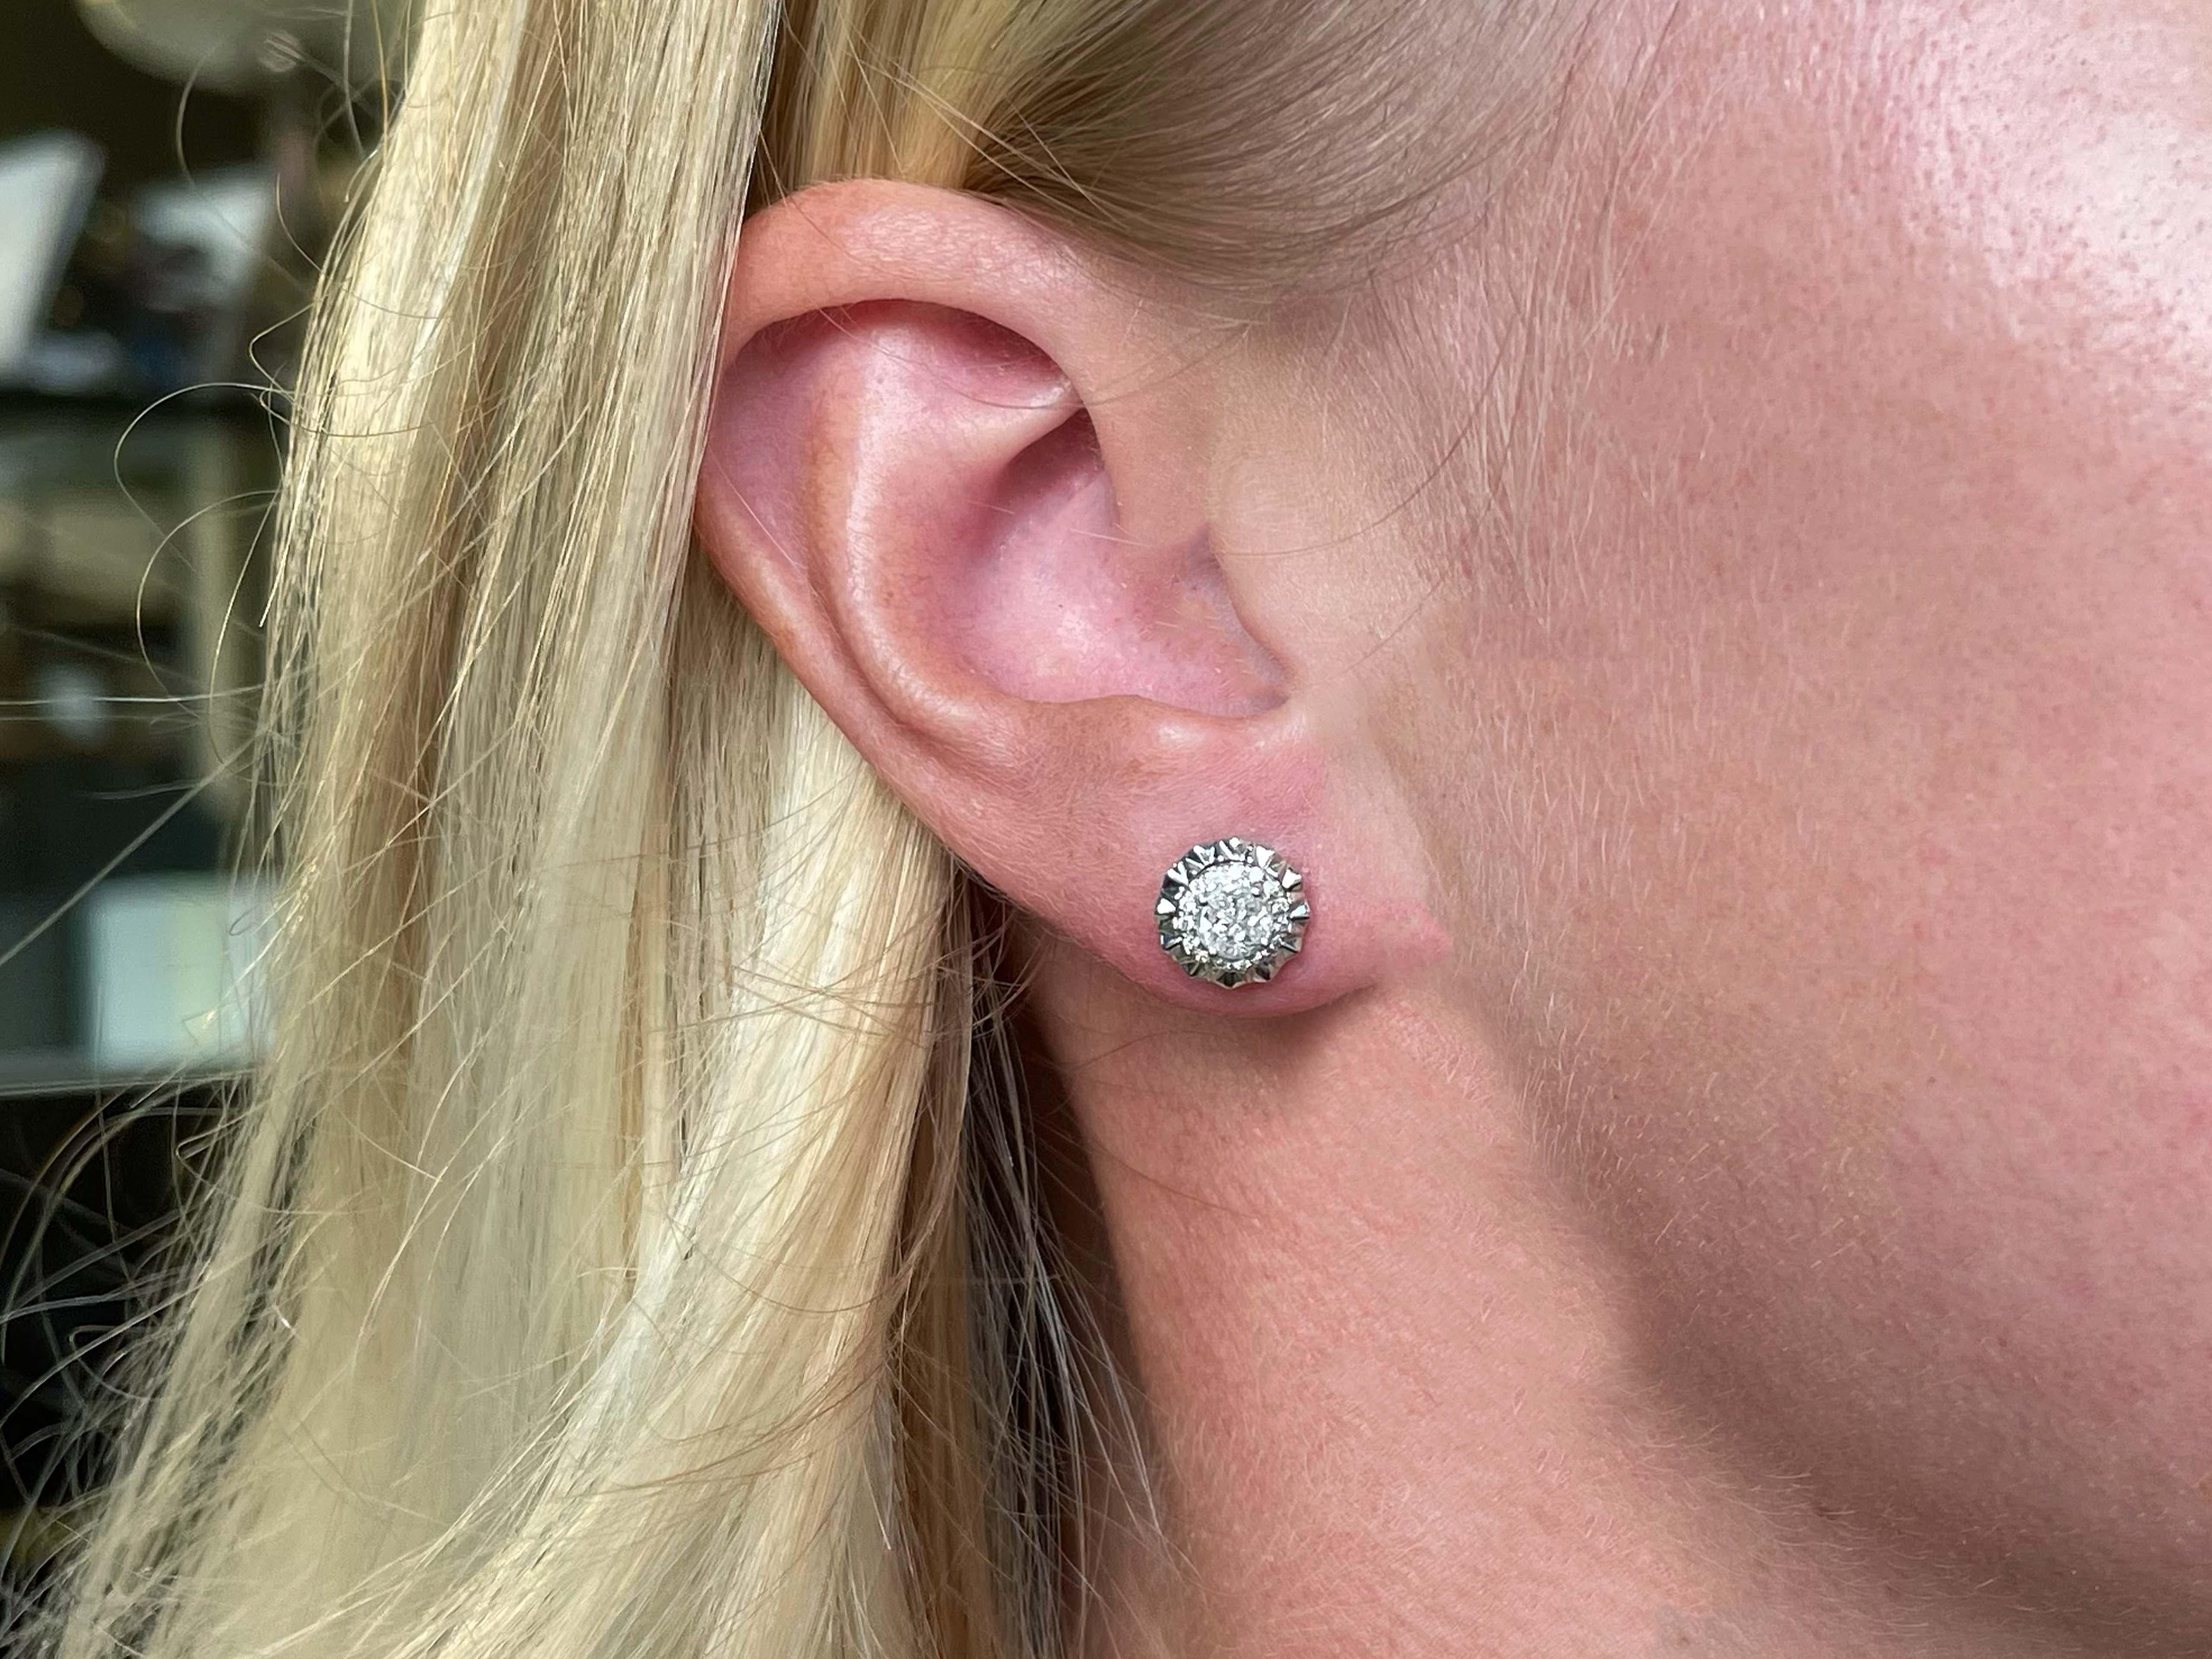 Earrings Specifications:

Metal: 18k White Gold

Earring Diameter: 9.1 mm

Total Weight: 3.4 Grams

Diamonds: 38

Diamond Color: G-H (halo), G (pie-cut center)

Diamond Clarity: SI1(halo), VS2 (piecut)
​
​Total Diamond Carat Weight: 0.75